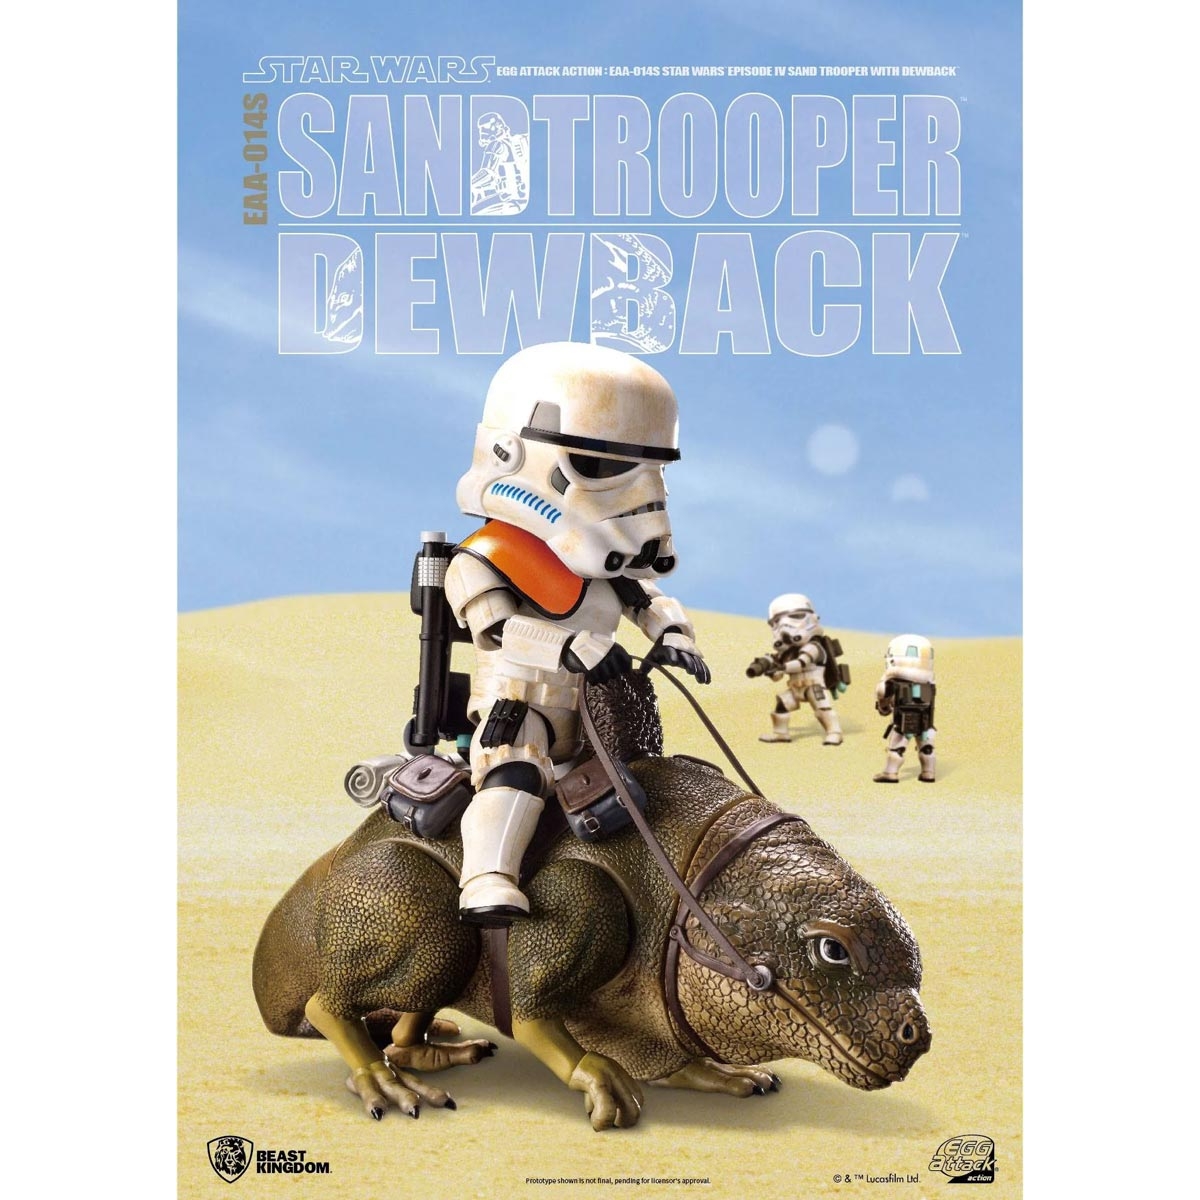 Dewback with Sandtrooper...